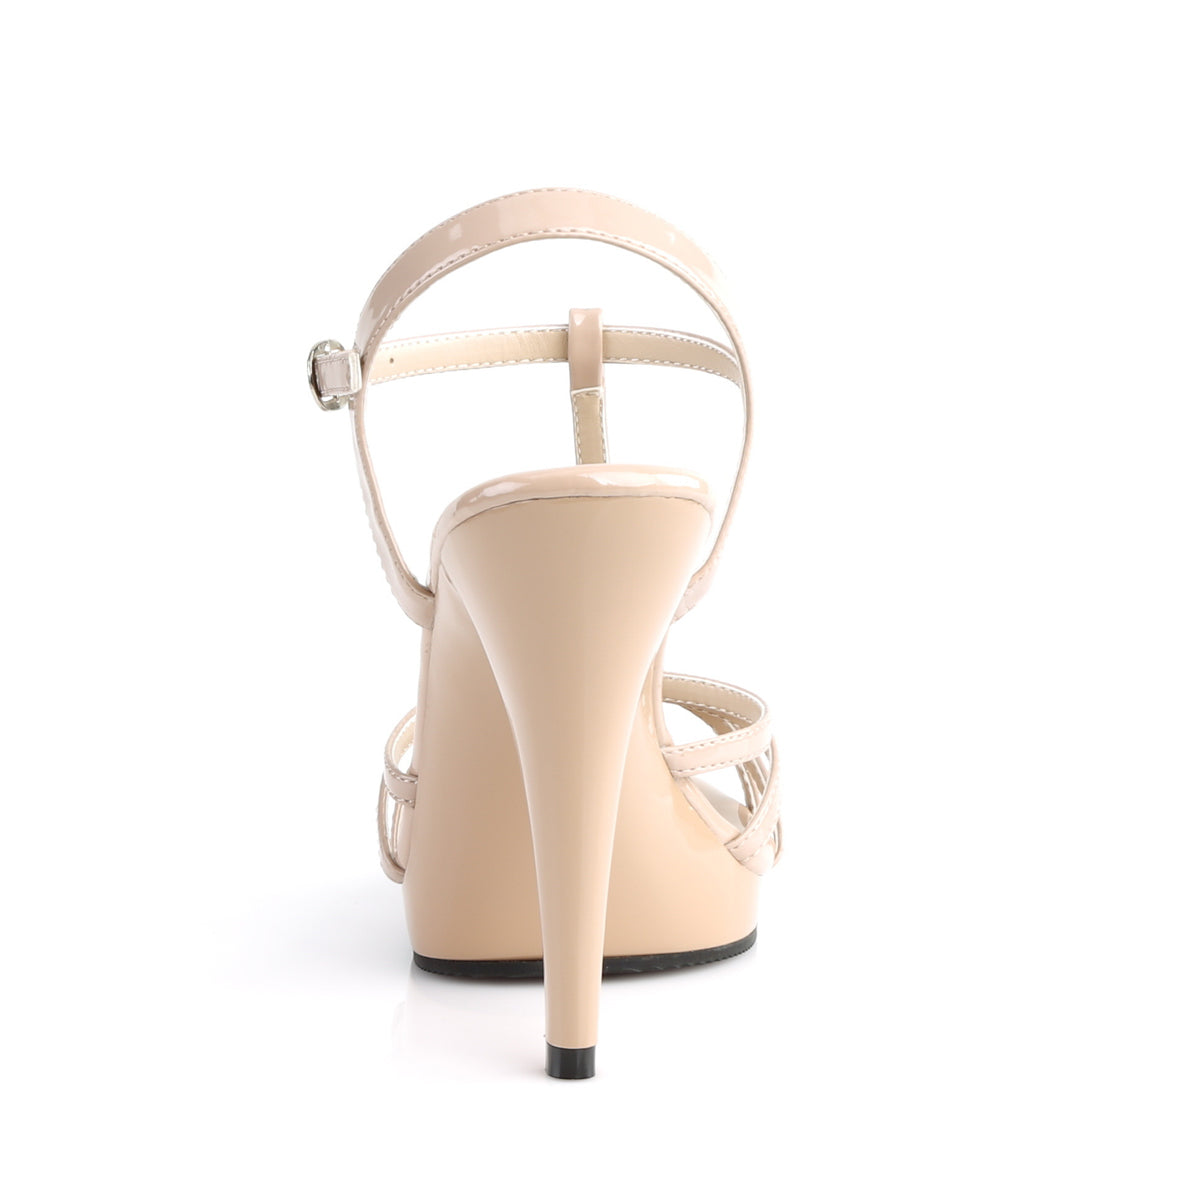 Fabulicious Sandali da donna FLAIR-420 PET NUDE / NUDE